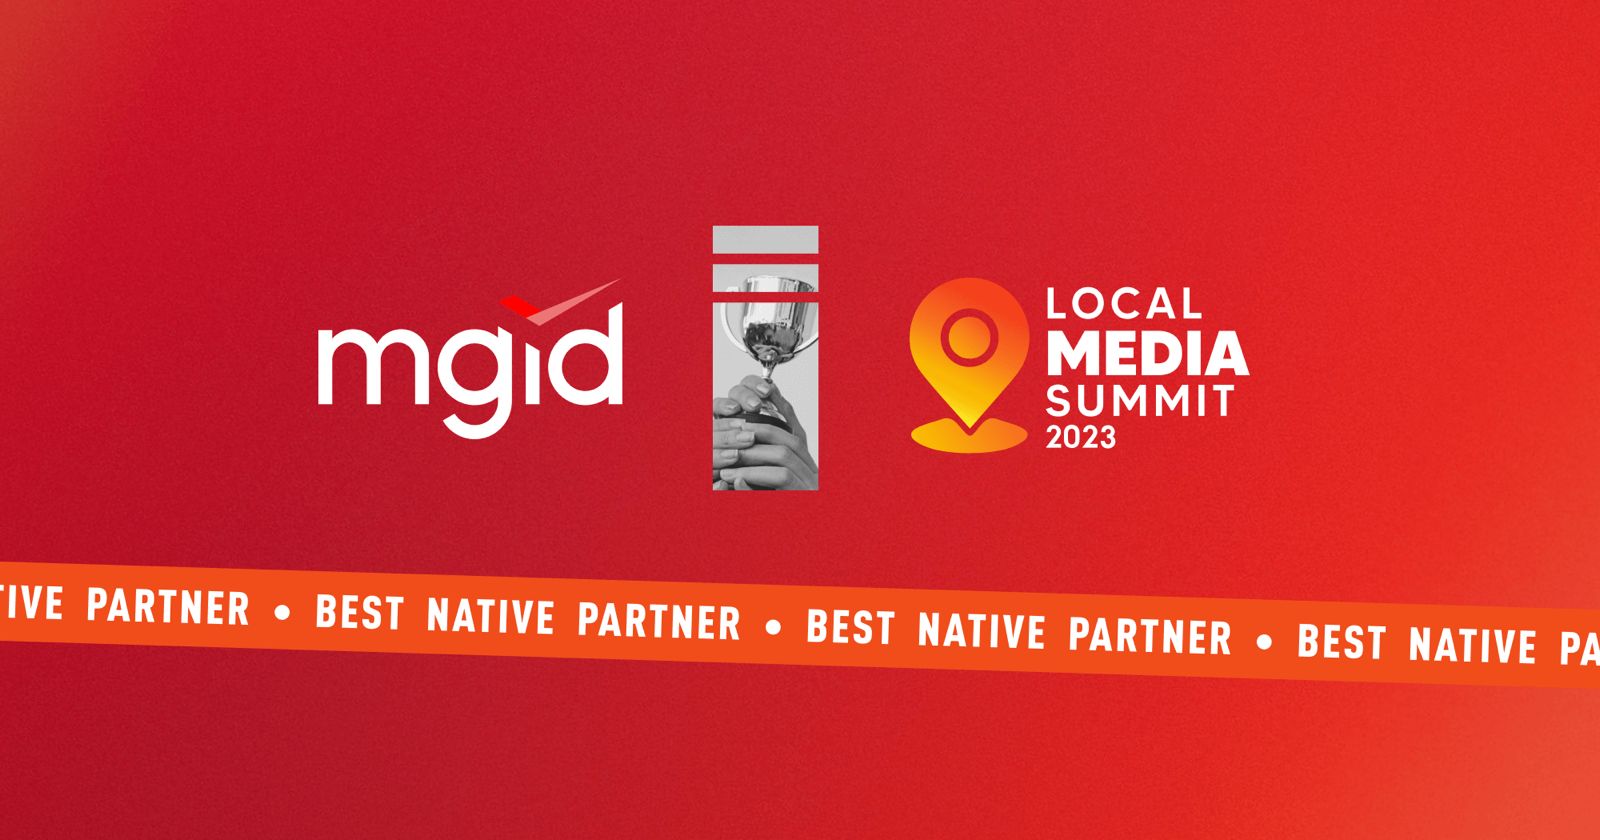 Mgid Raih Best Native Partner di Local Media Summit 2023